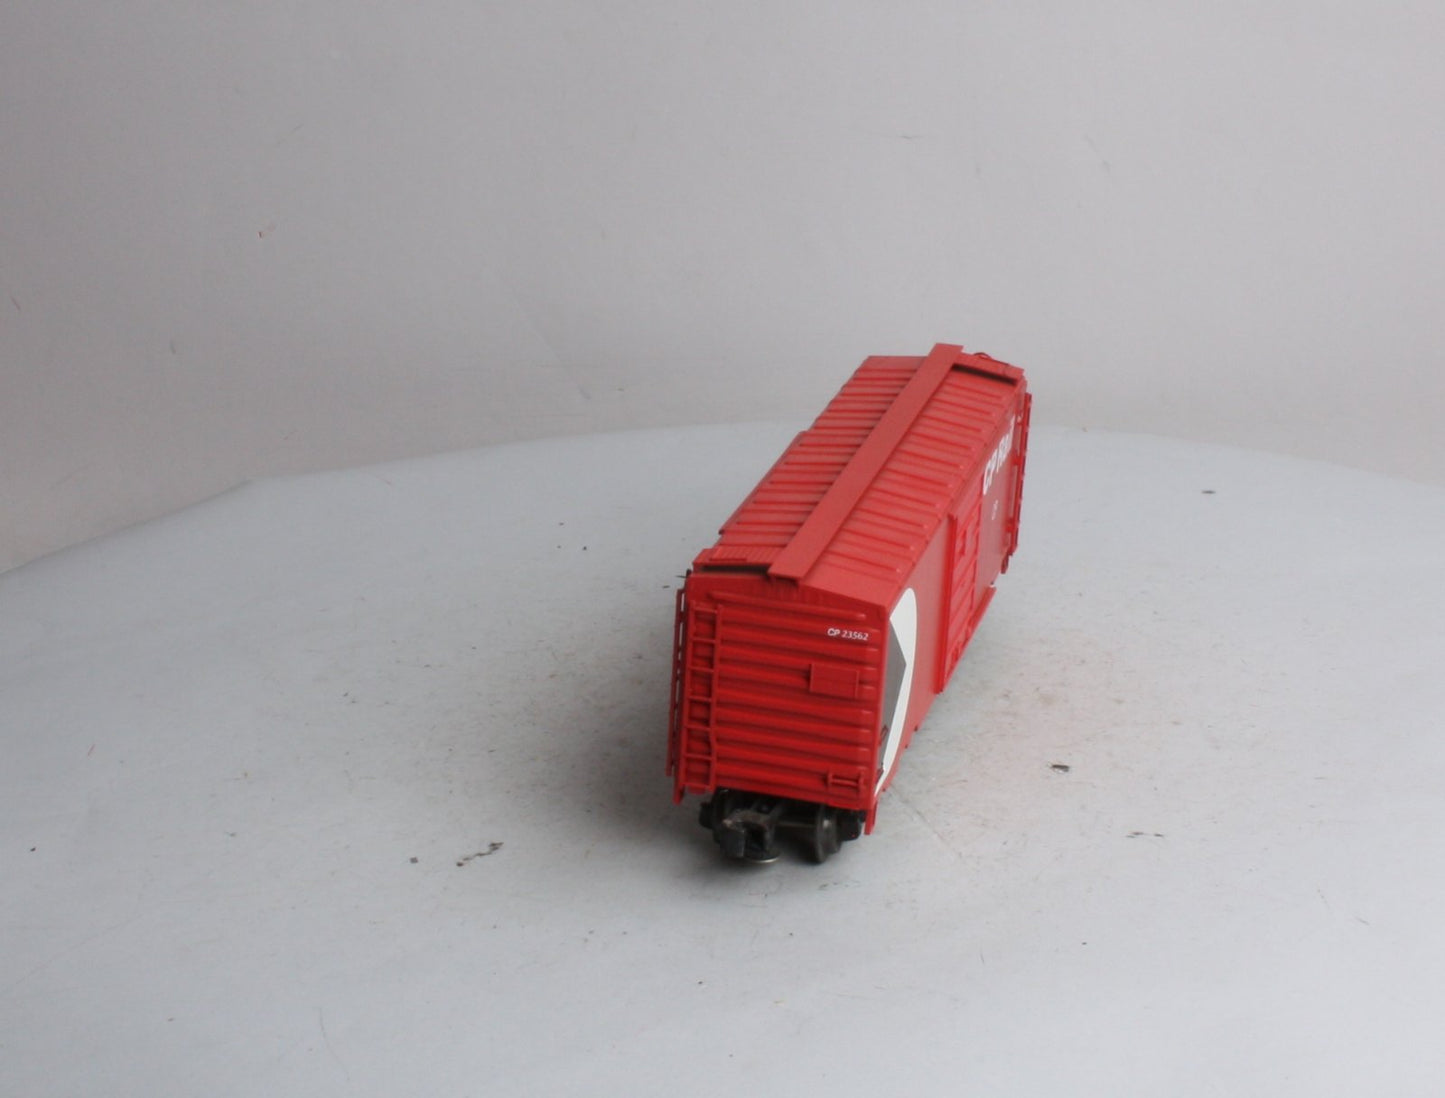 Weaver 2034 Canadian Pacific Rail Boxcar #23562 - 3 Rail EX/Box